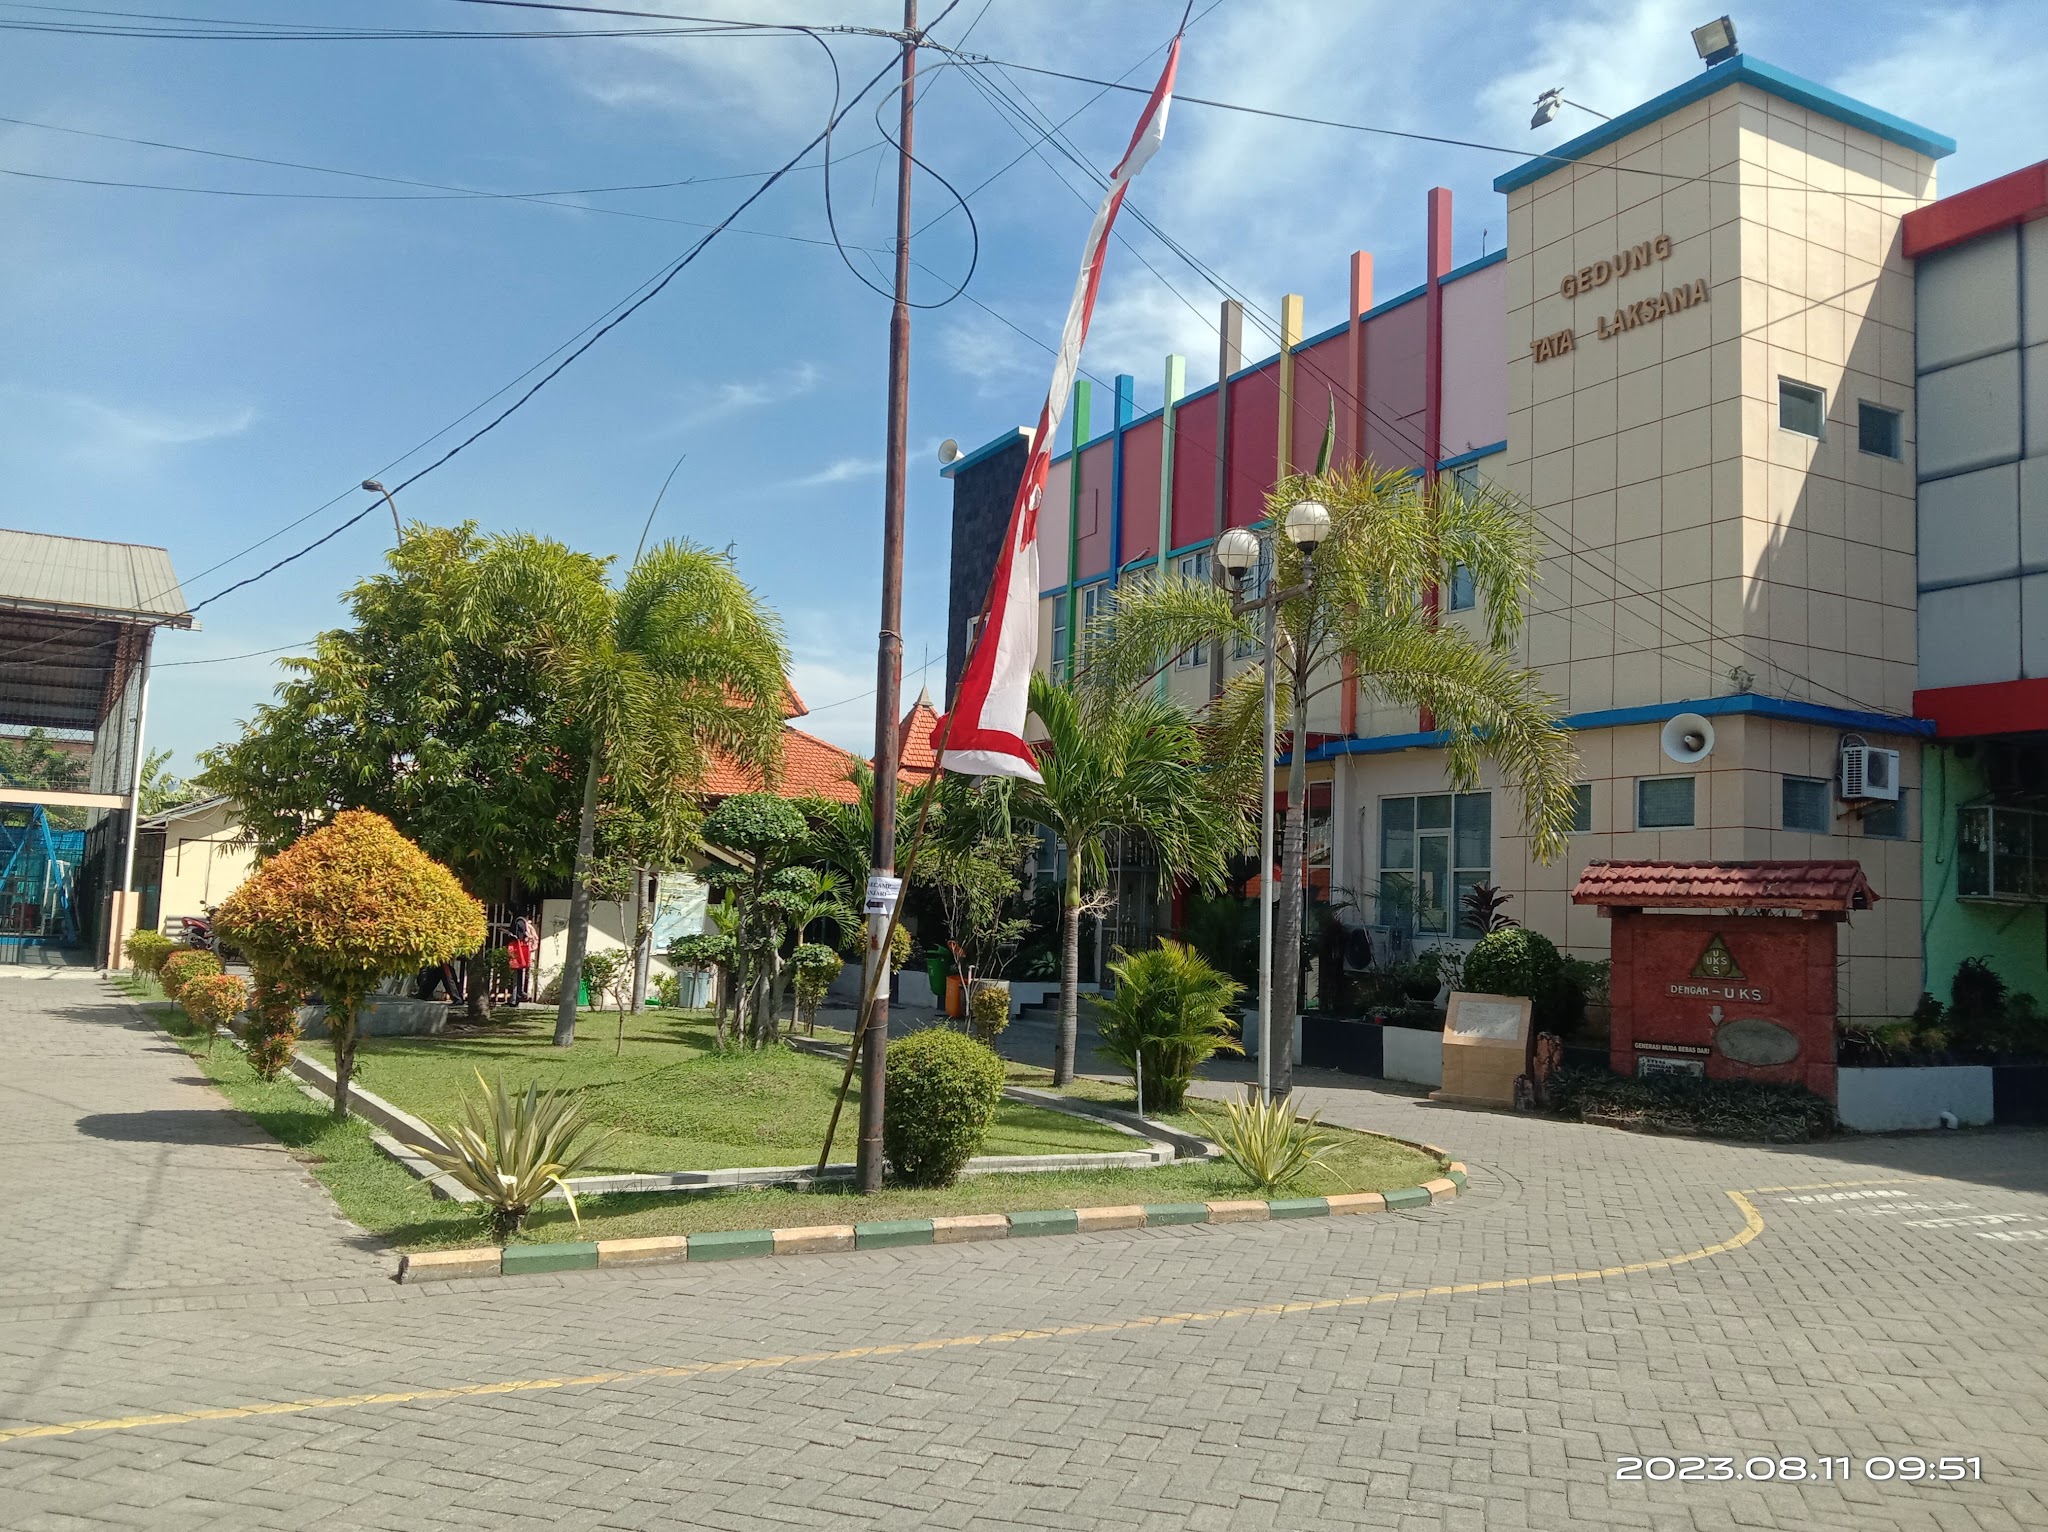 Foto SMKN  5 Surabaya, Kota Surabaya